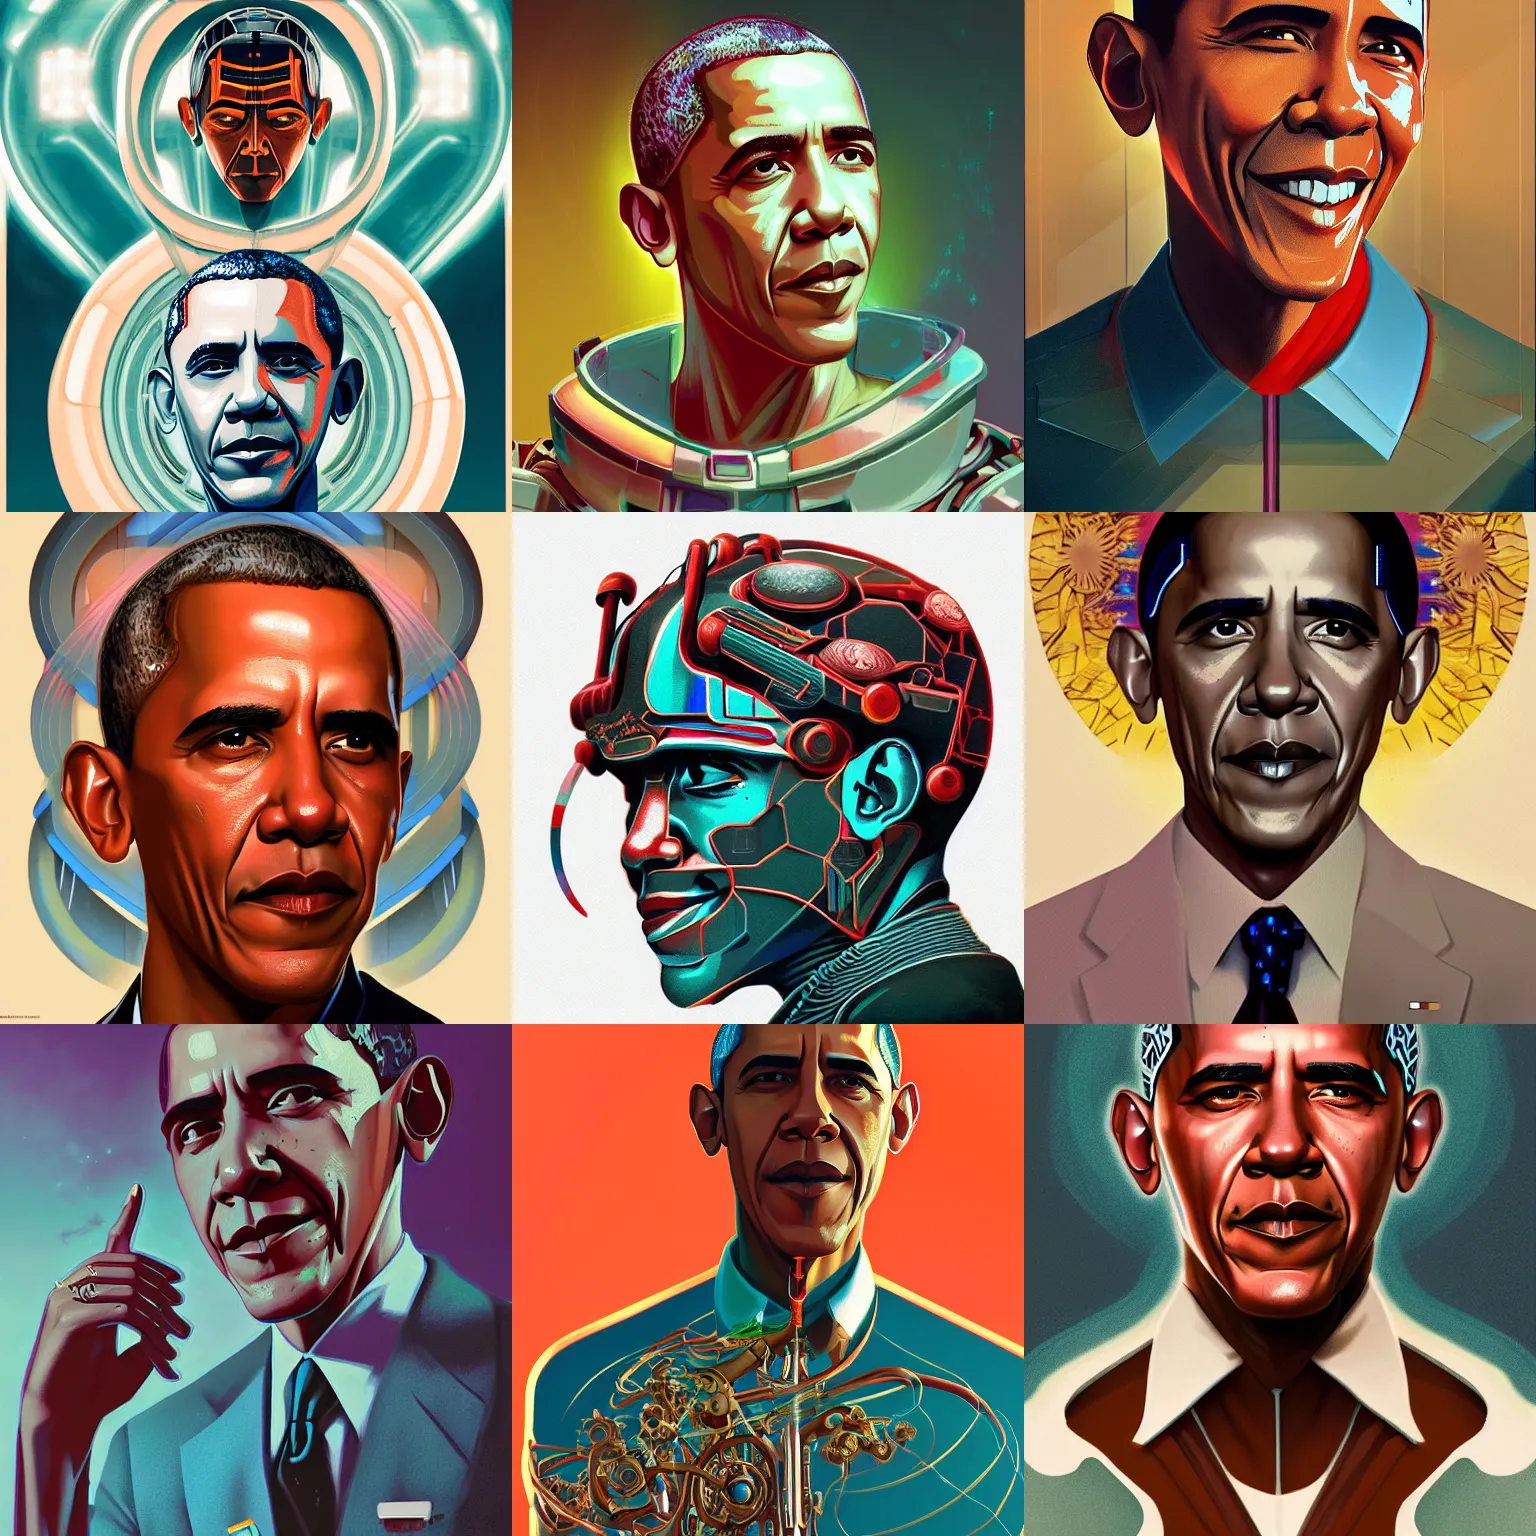 Prompt: Barack Obama as a cyborg, art deco design, by Mandy Jurgens and Warhol, Ernst Haeckel, James Jean, artstation, concept art